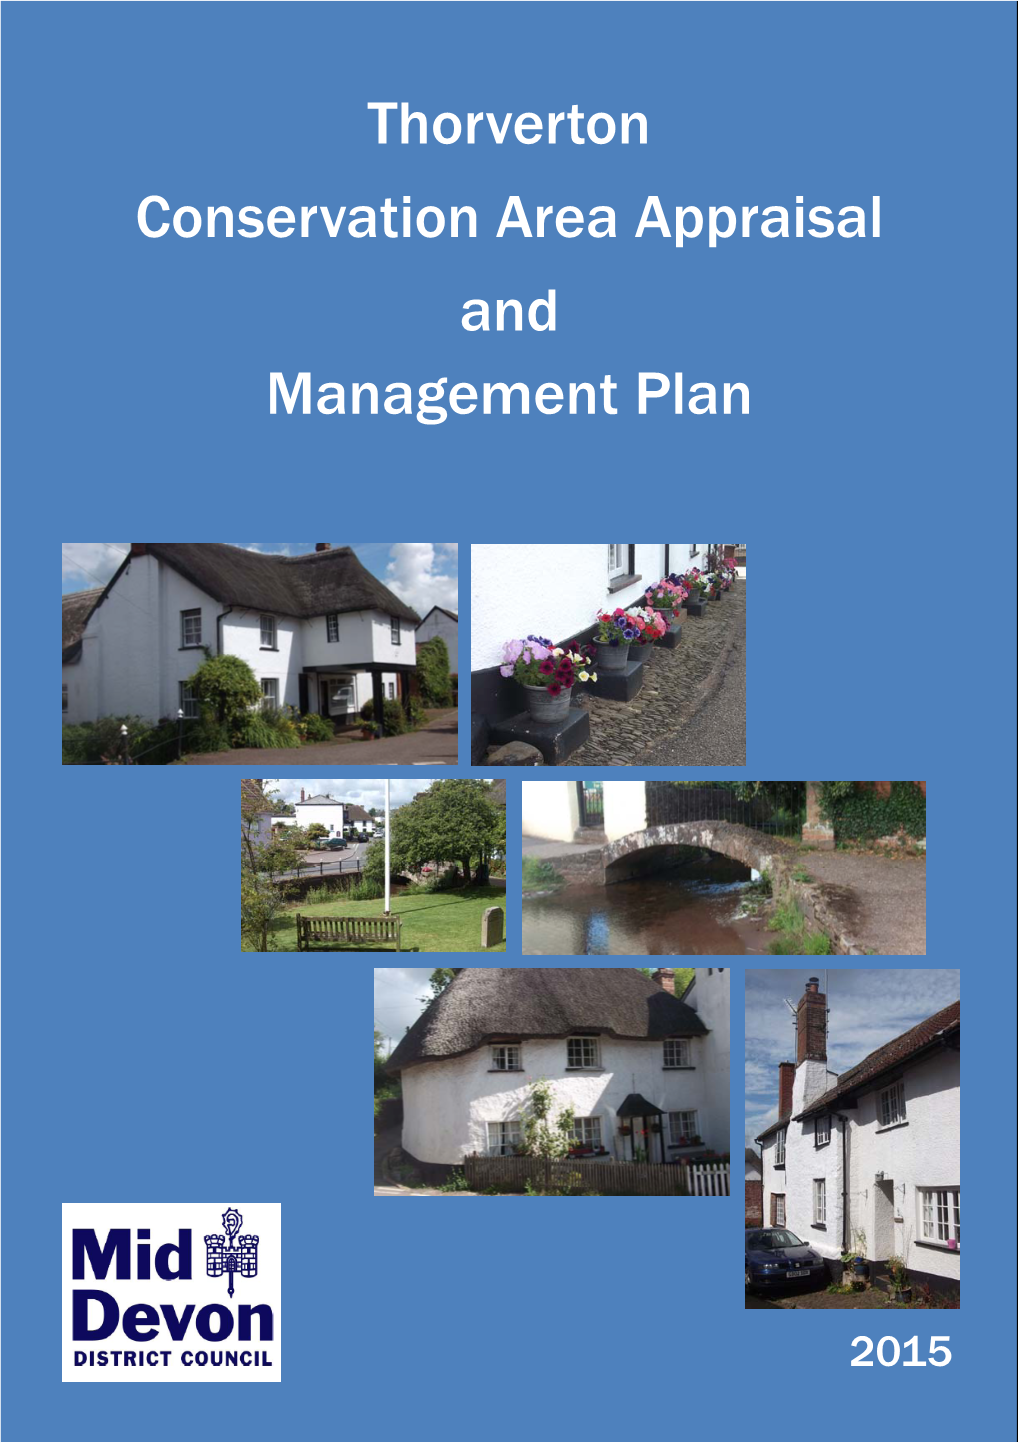 Thorverton Conservation Area Appraisal and Management Plan